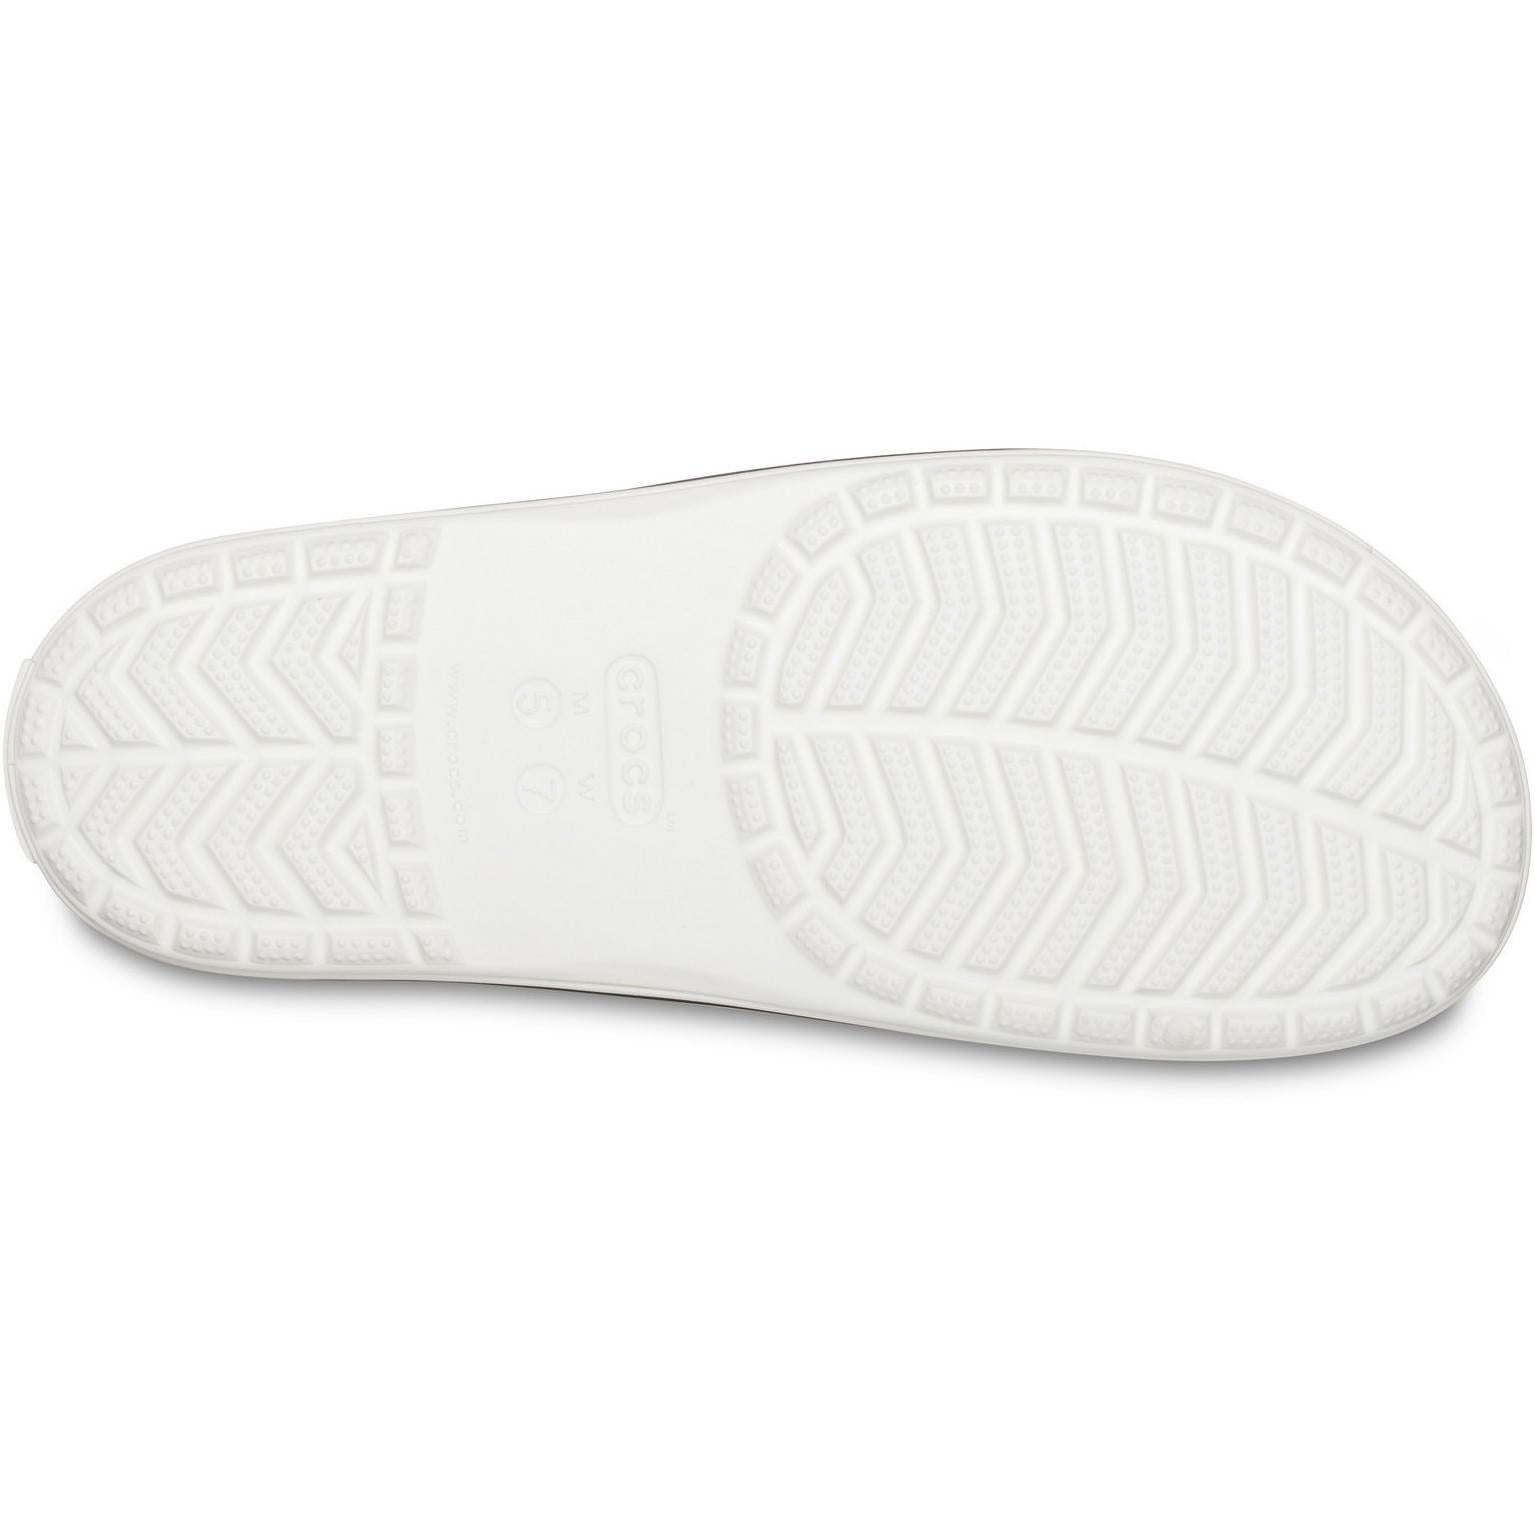 Crocs Crocband III Slide Slip On Sandals